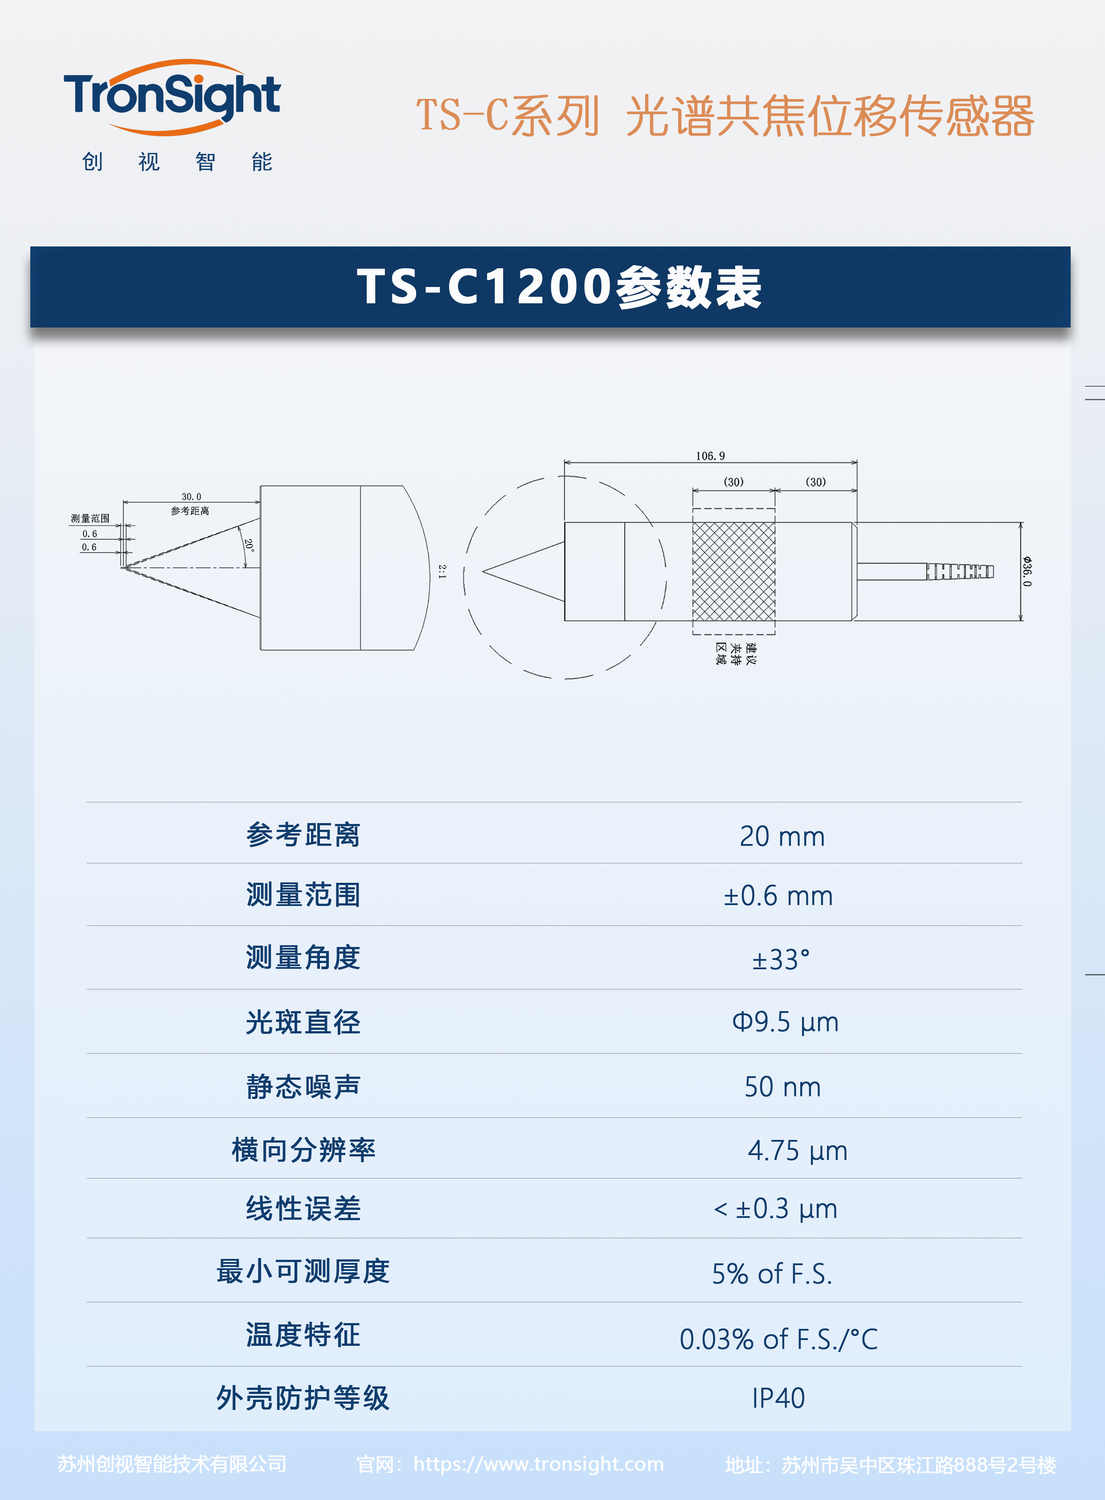 TS-C1200.jpg